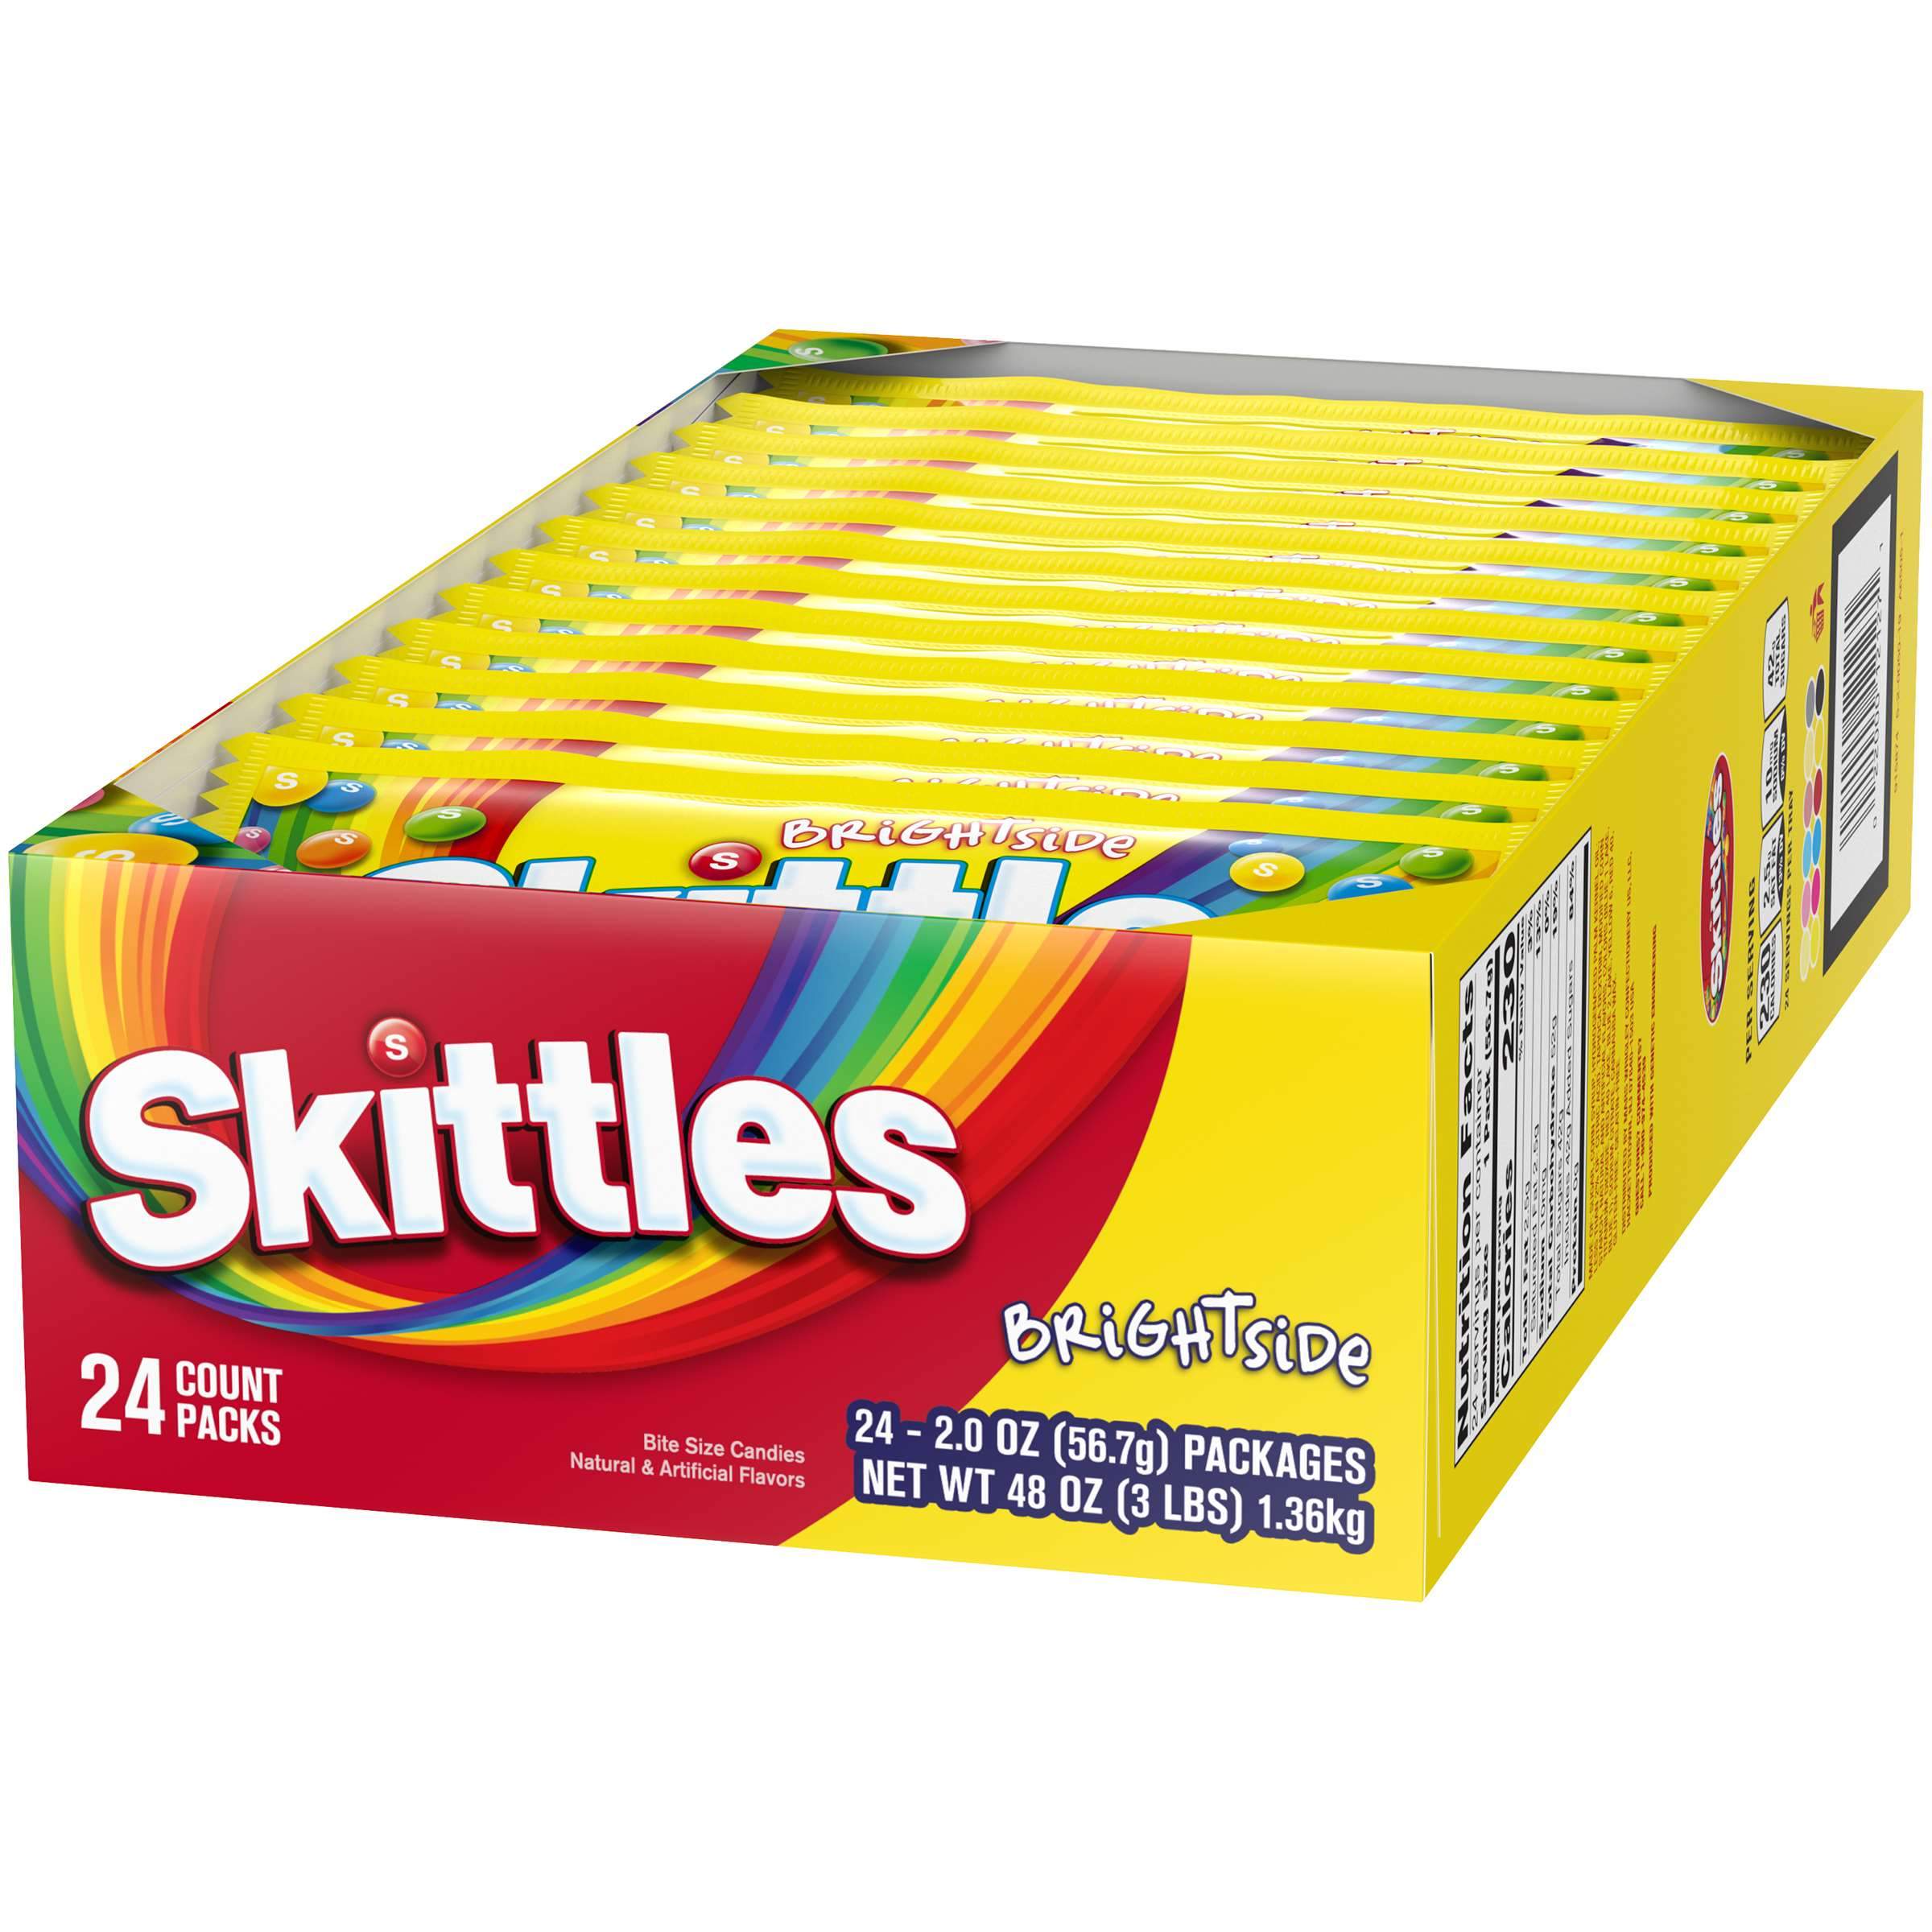 Skittles Candy Skittles Brightside 2 OZ-24 Count 